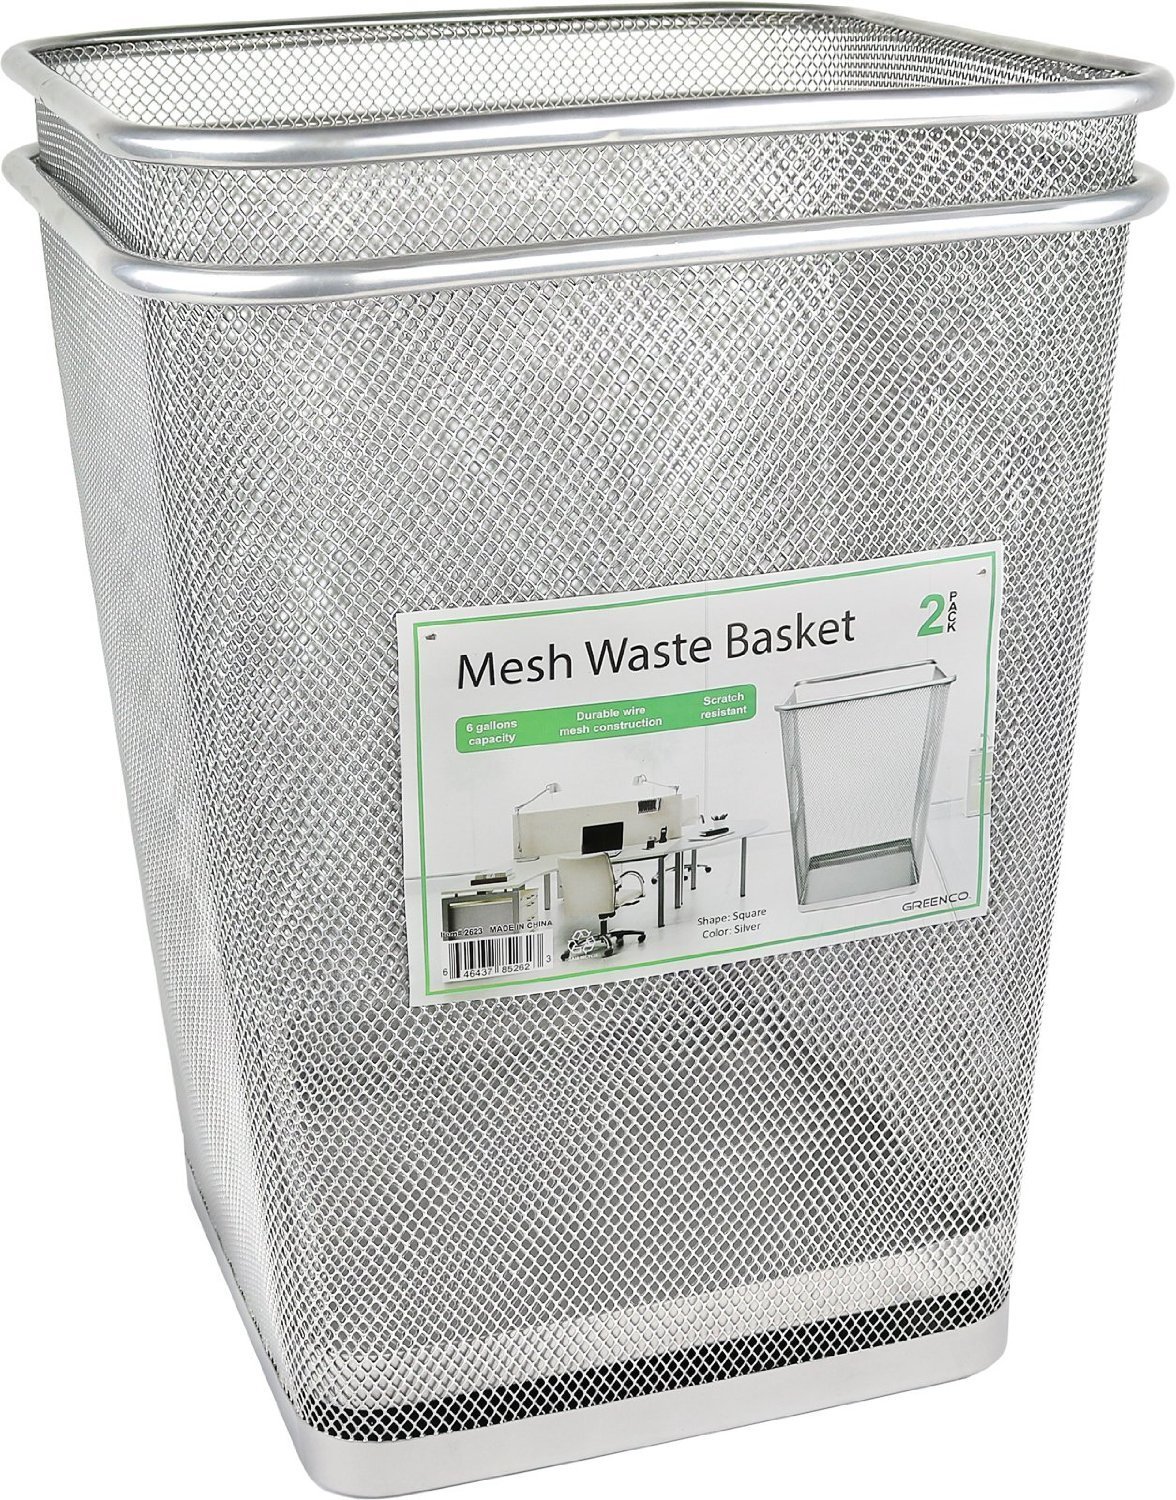 Silver, Square 6 Gallon Greenco Mesh Wastebasket Trash Can 2 Pack